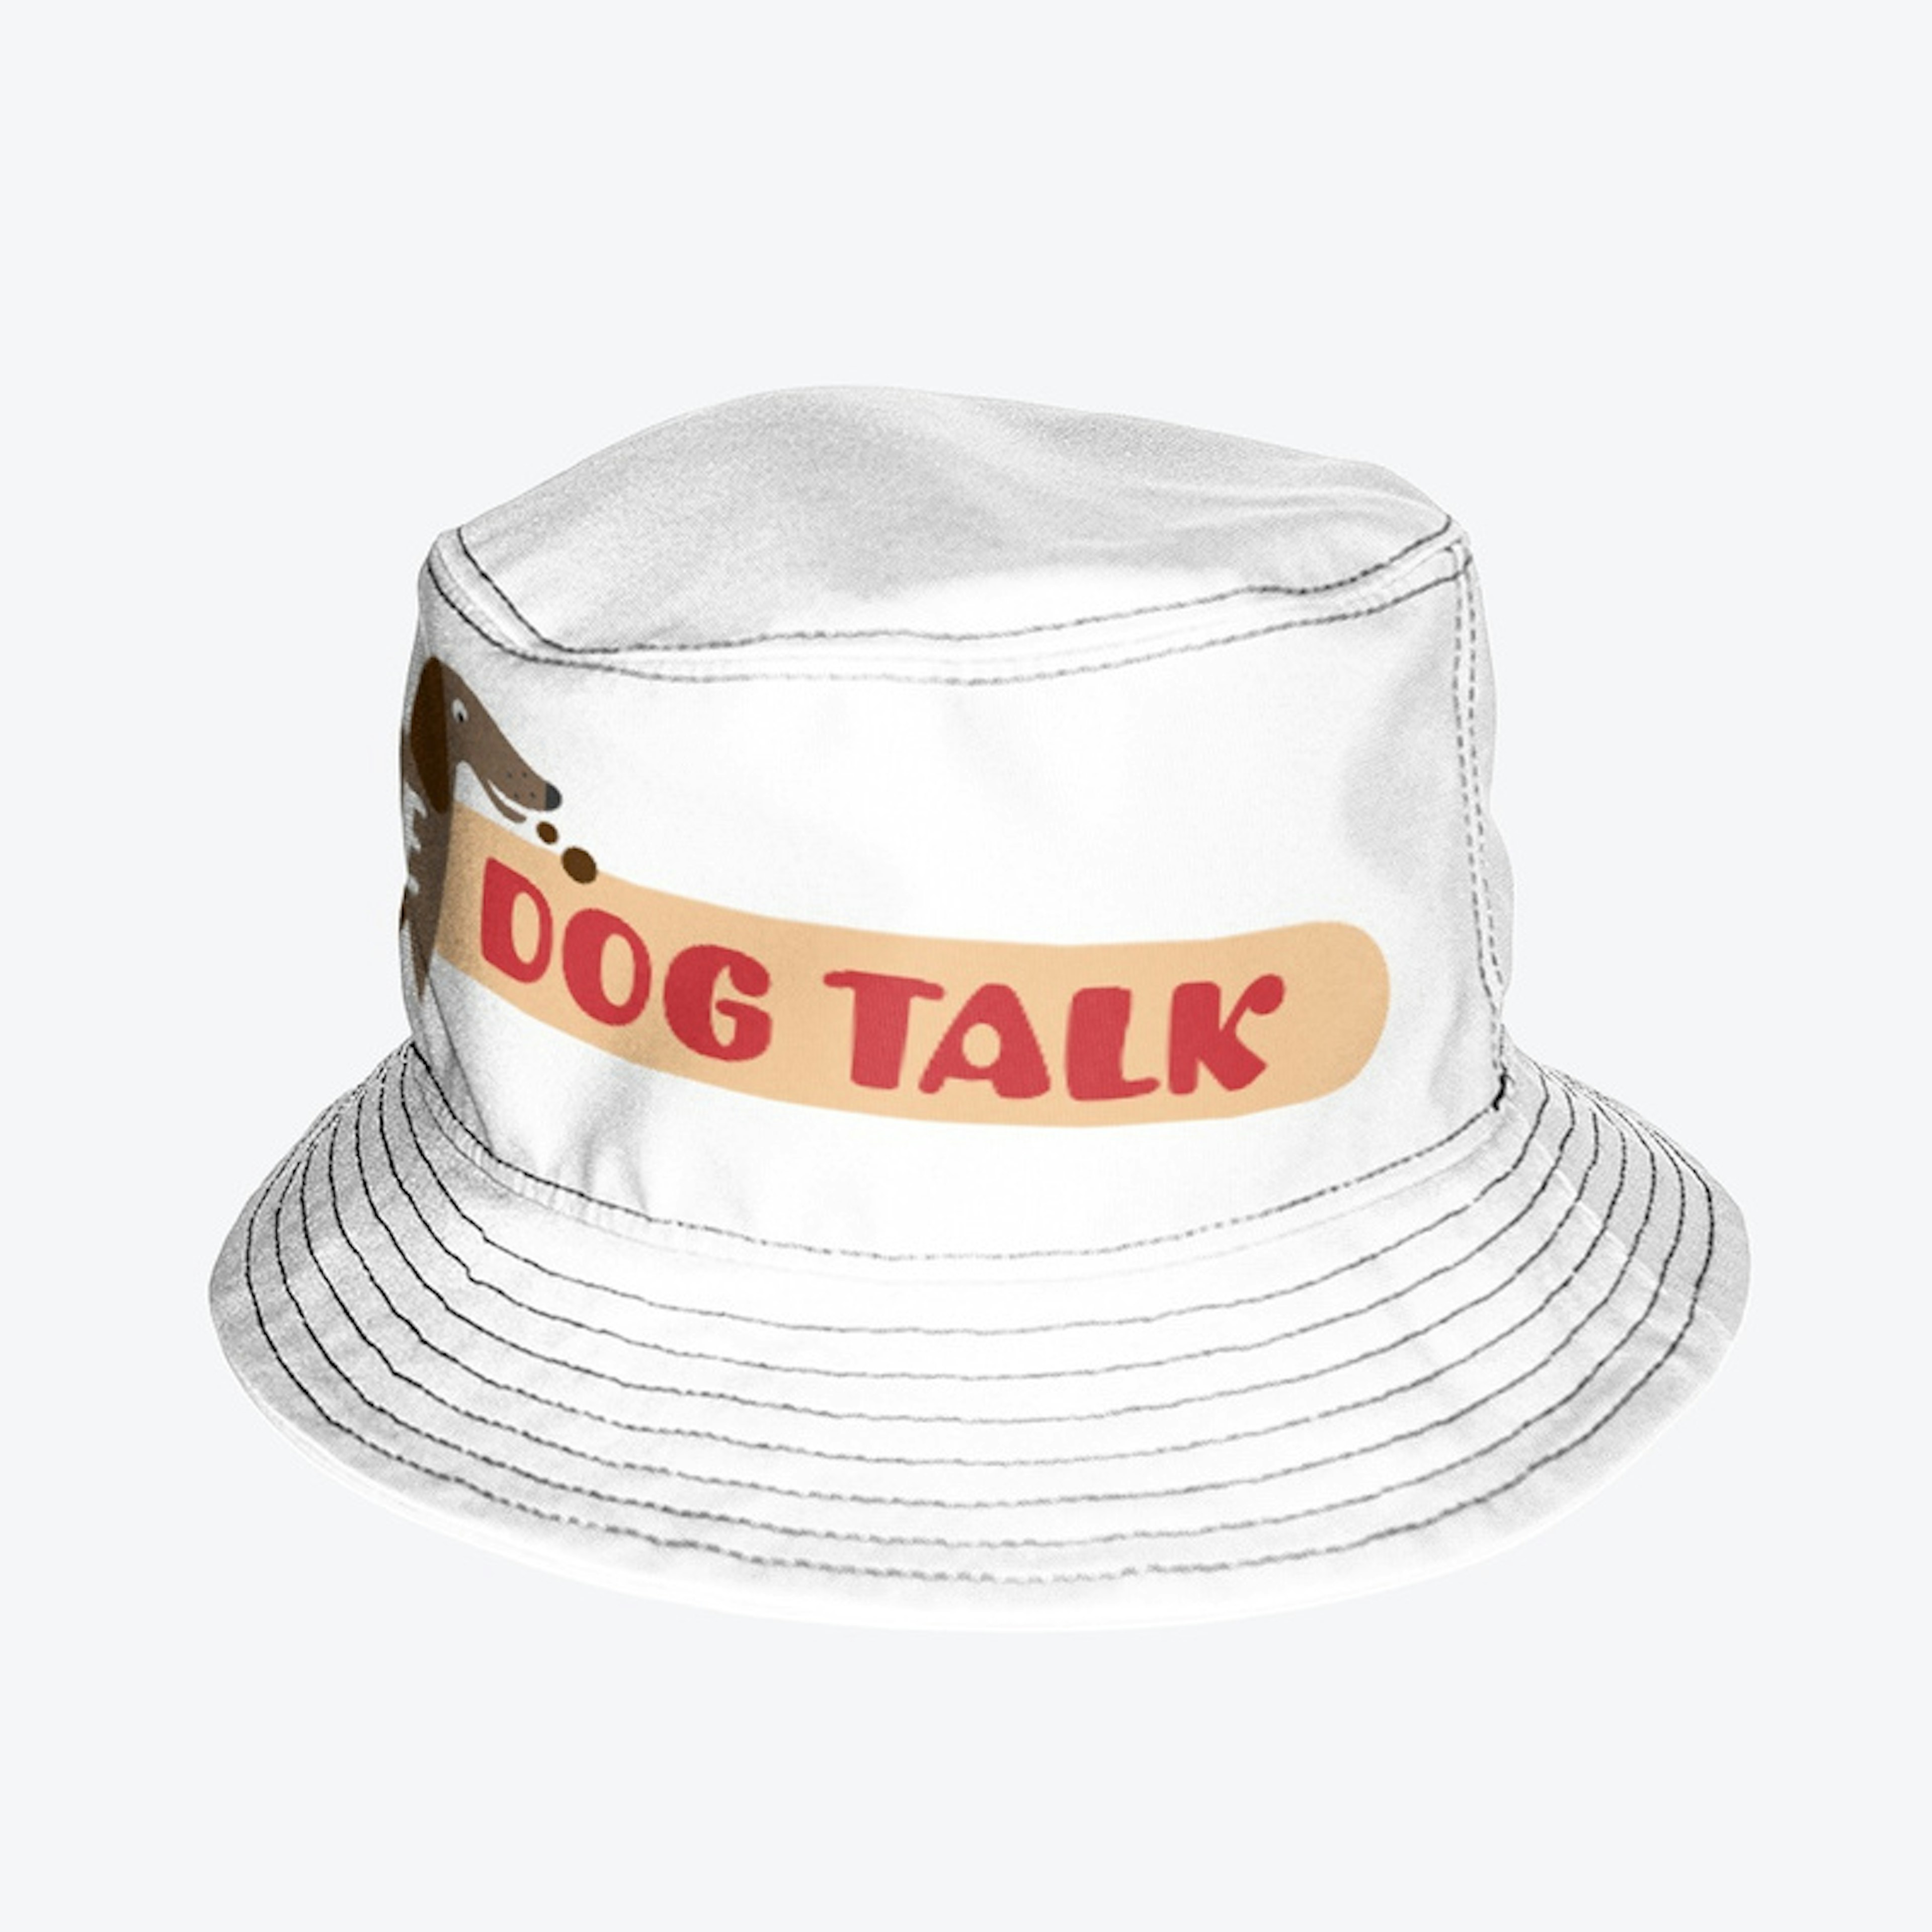 Pure Dog Talk Extras!